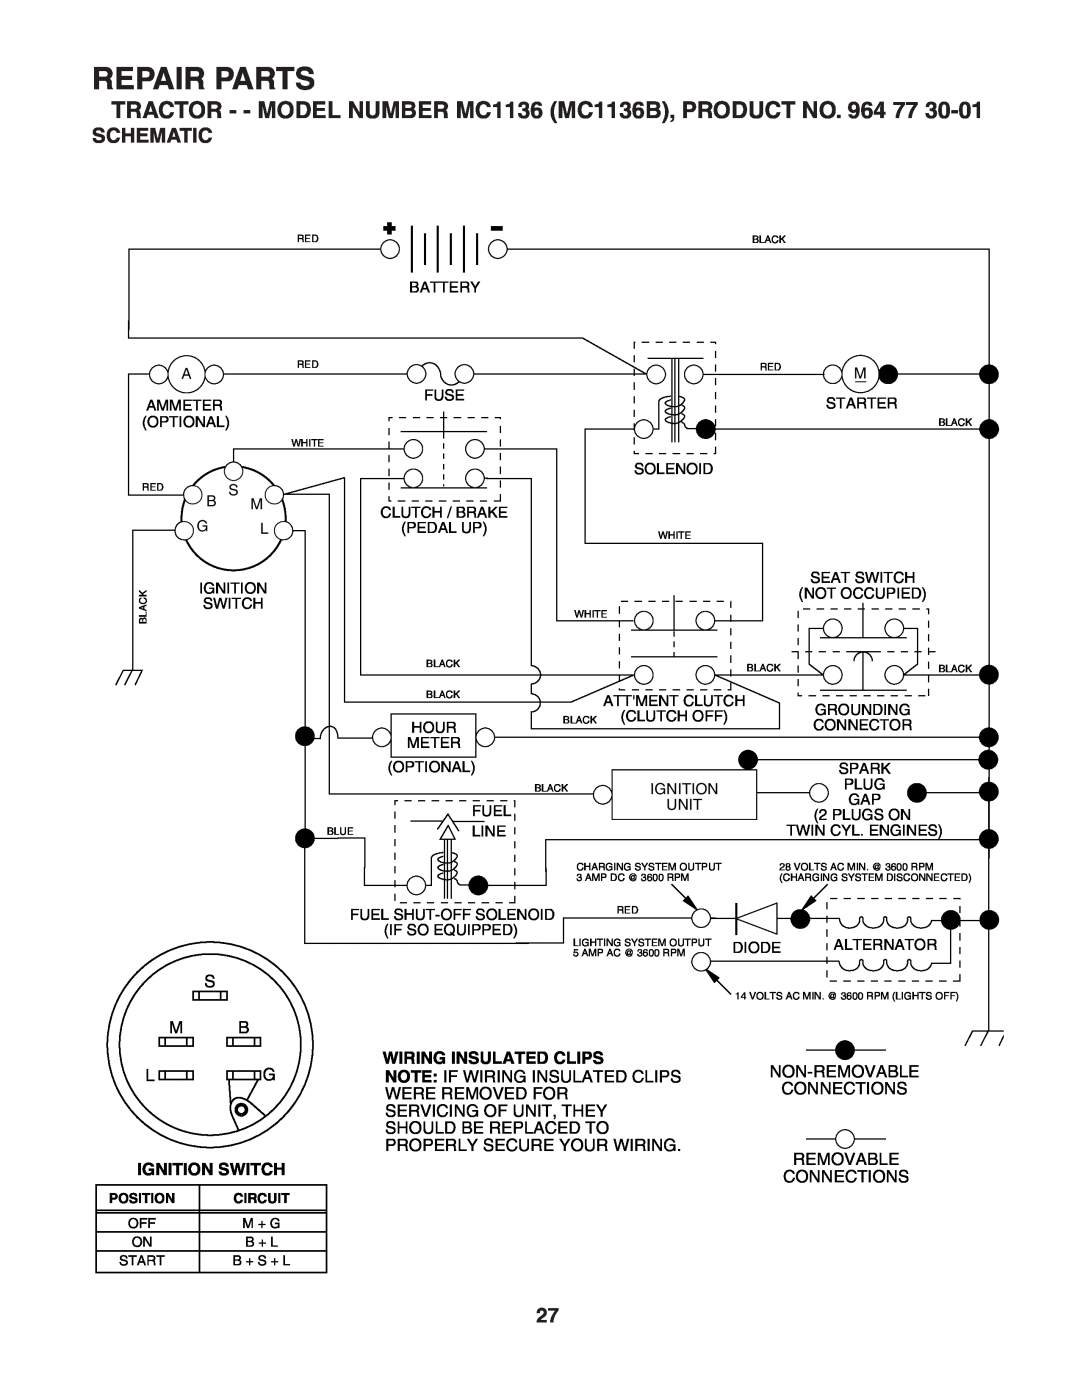 McCulloch manual Repair Parts, TRACTOR - - MODEL NUMBER MC1136 MC1136B, PRODUCT NO. 964, Schematic 